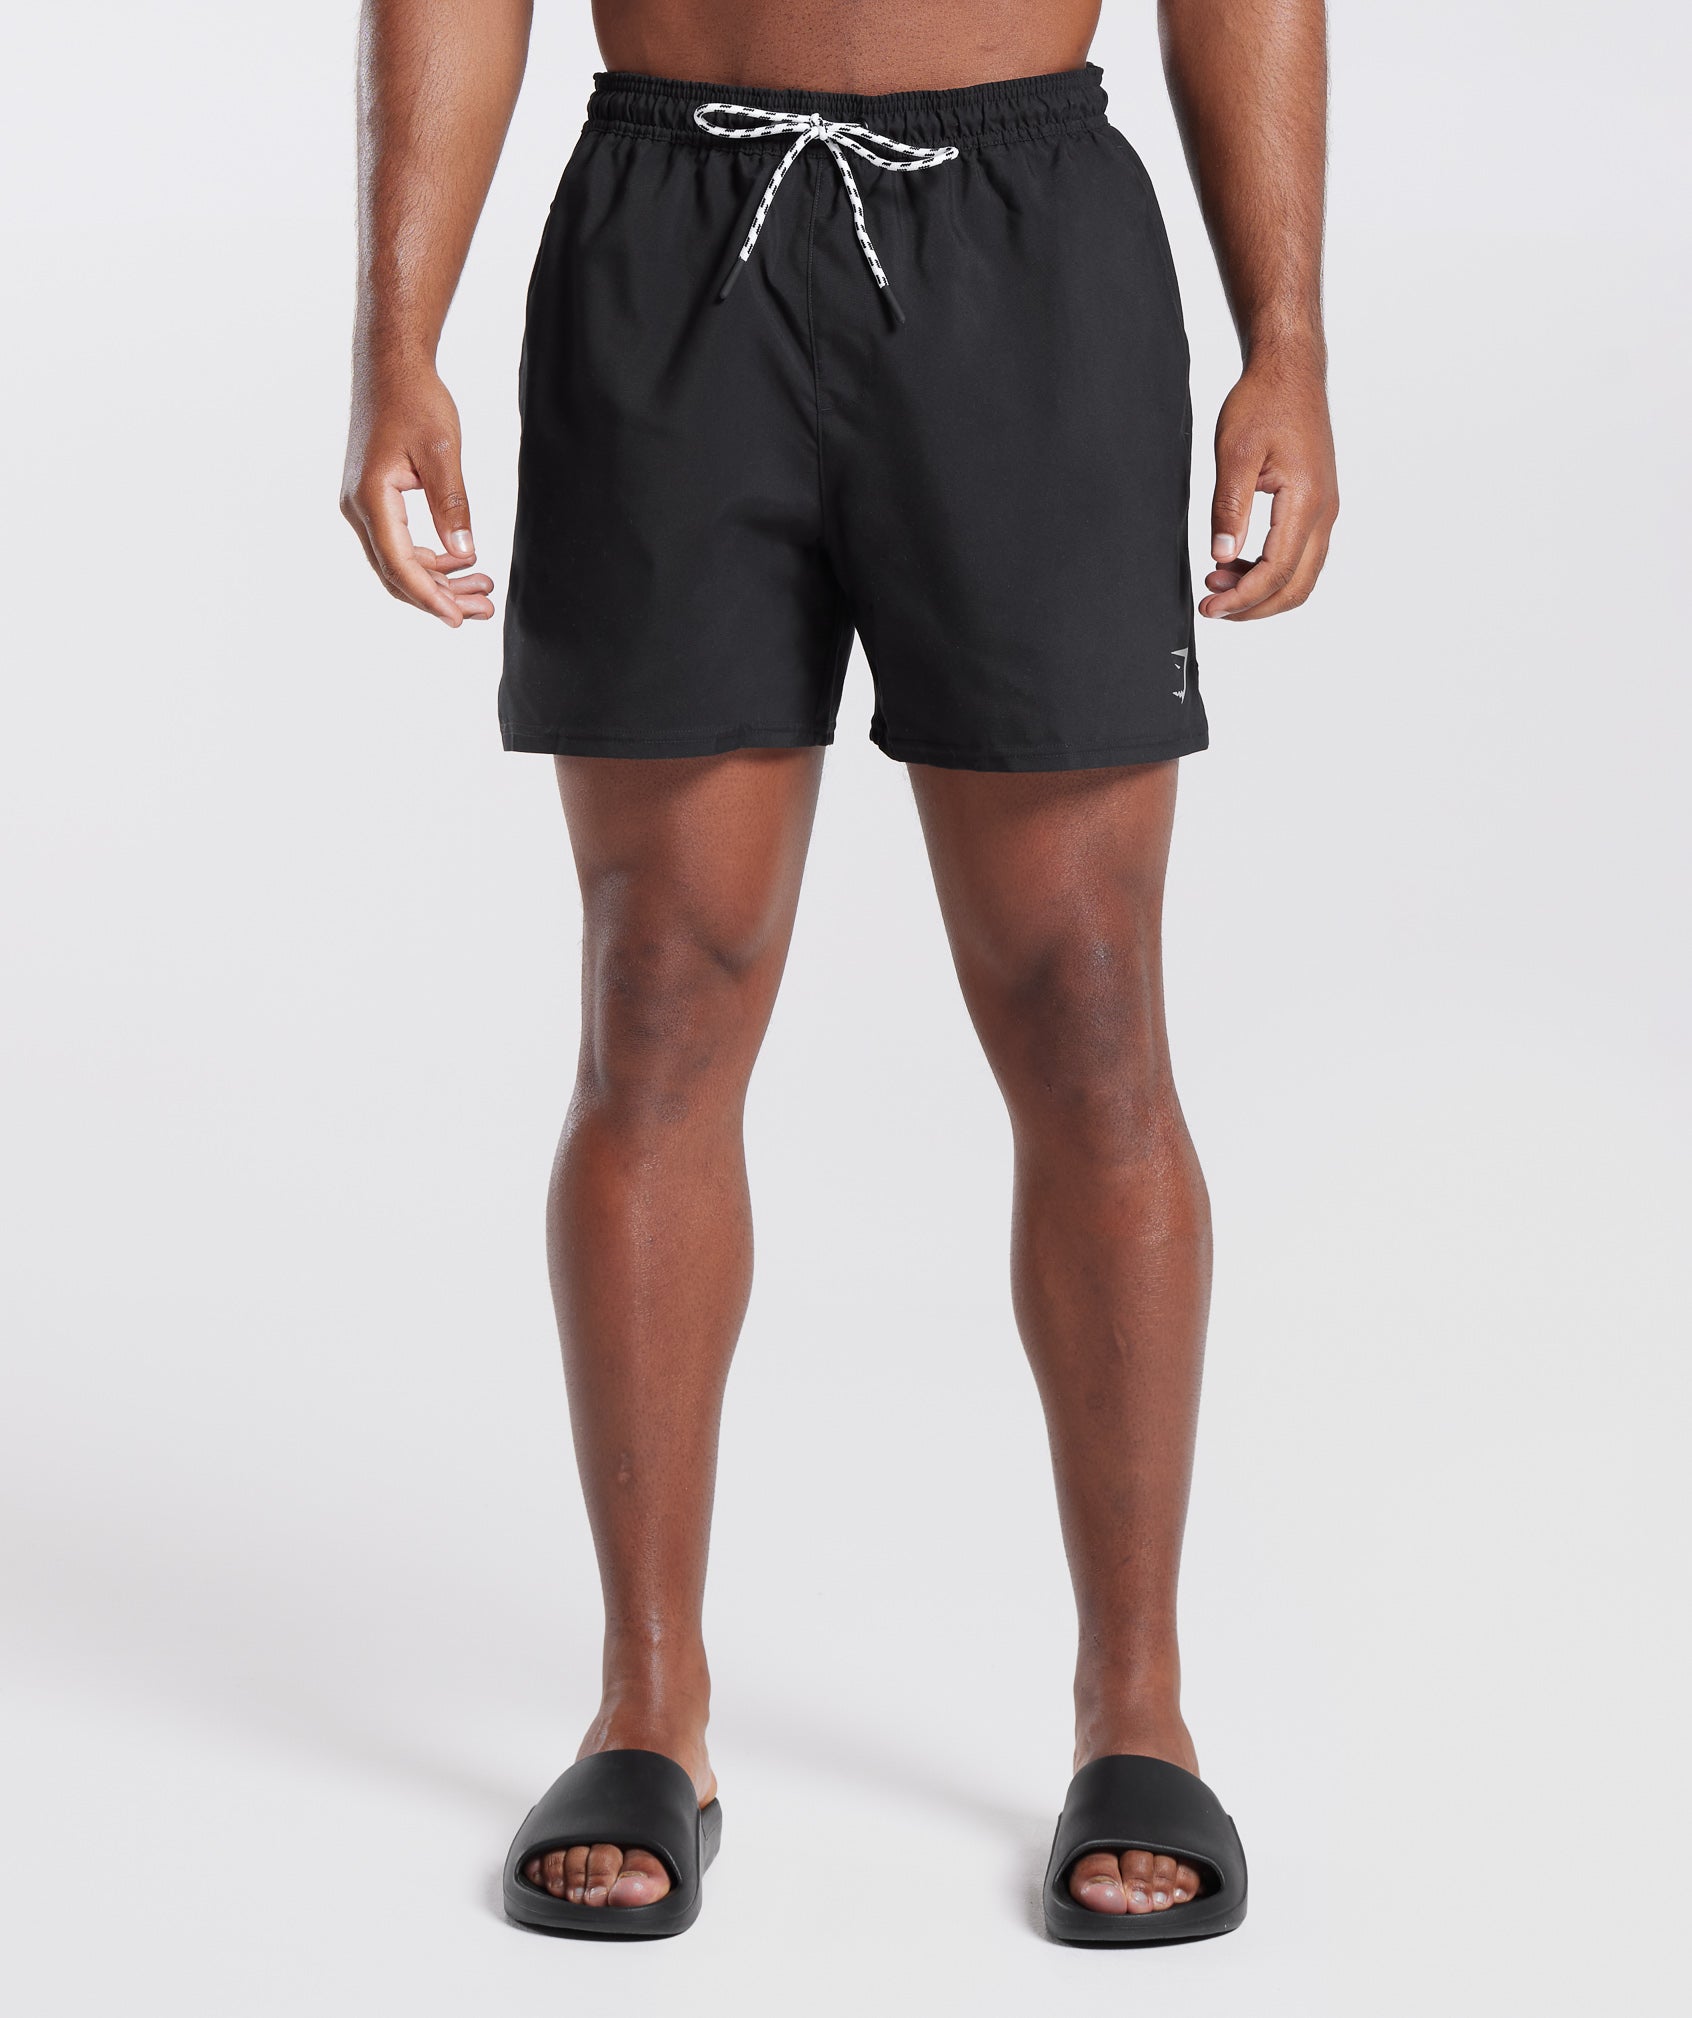 Men's Swim Trunks & Board Shorts, Swimwear For Men